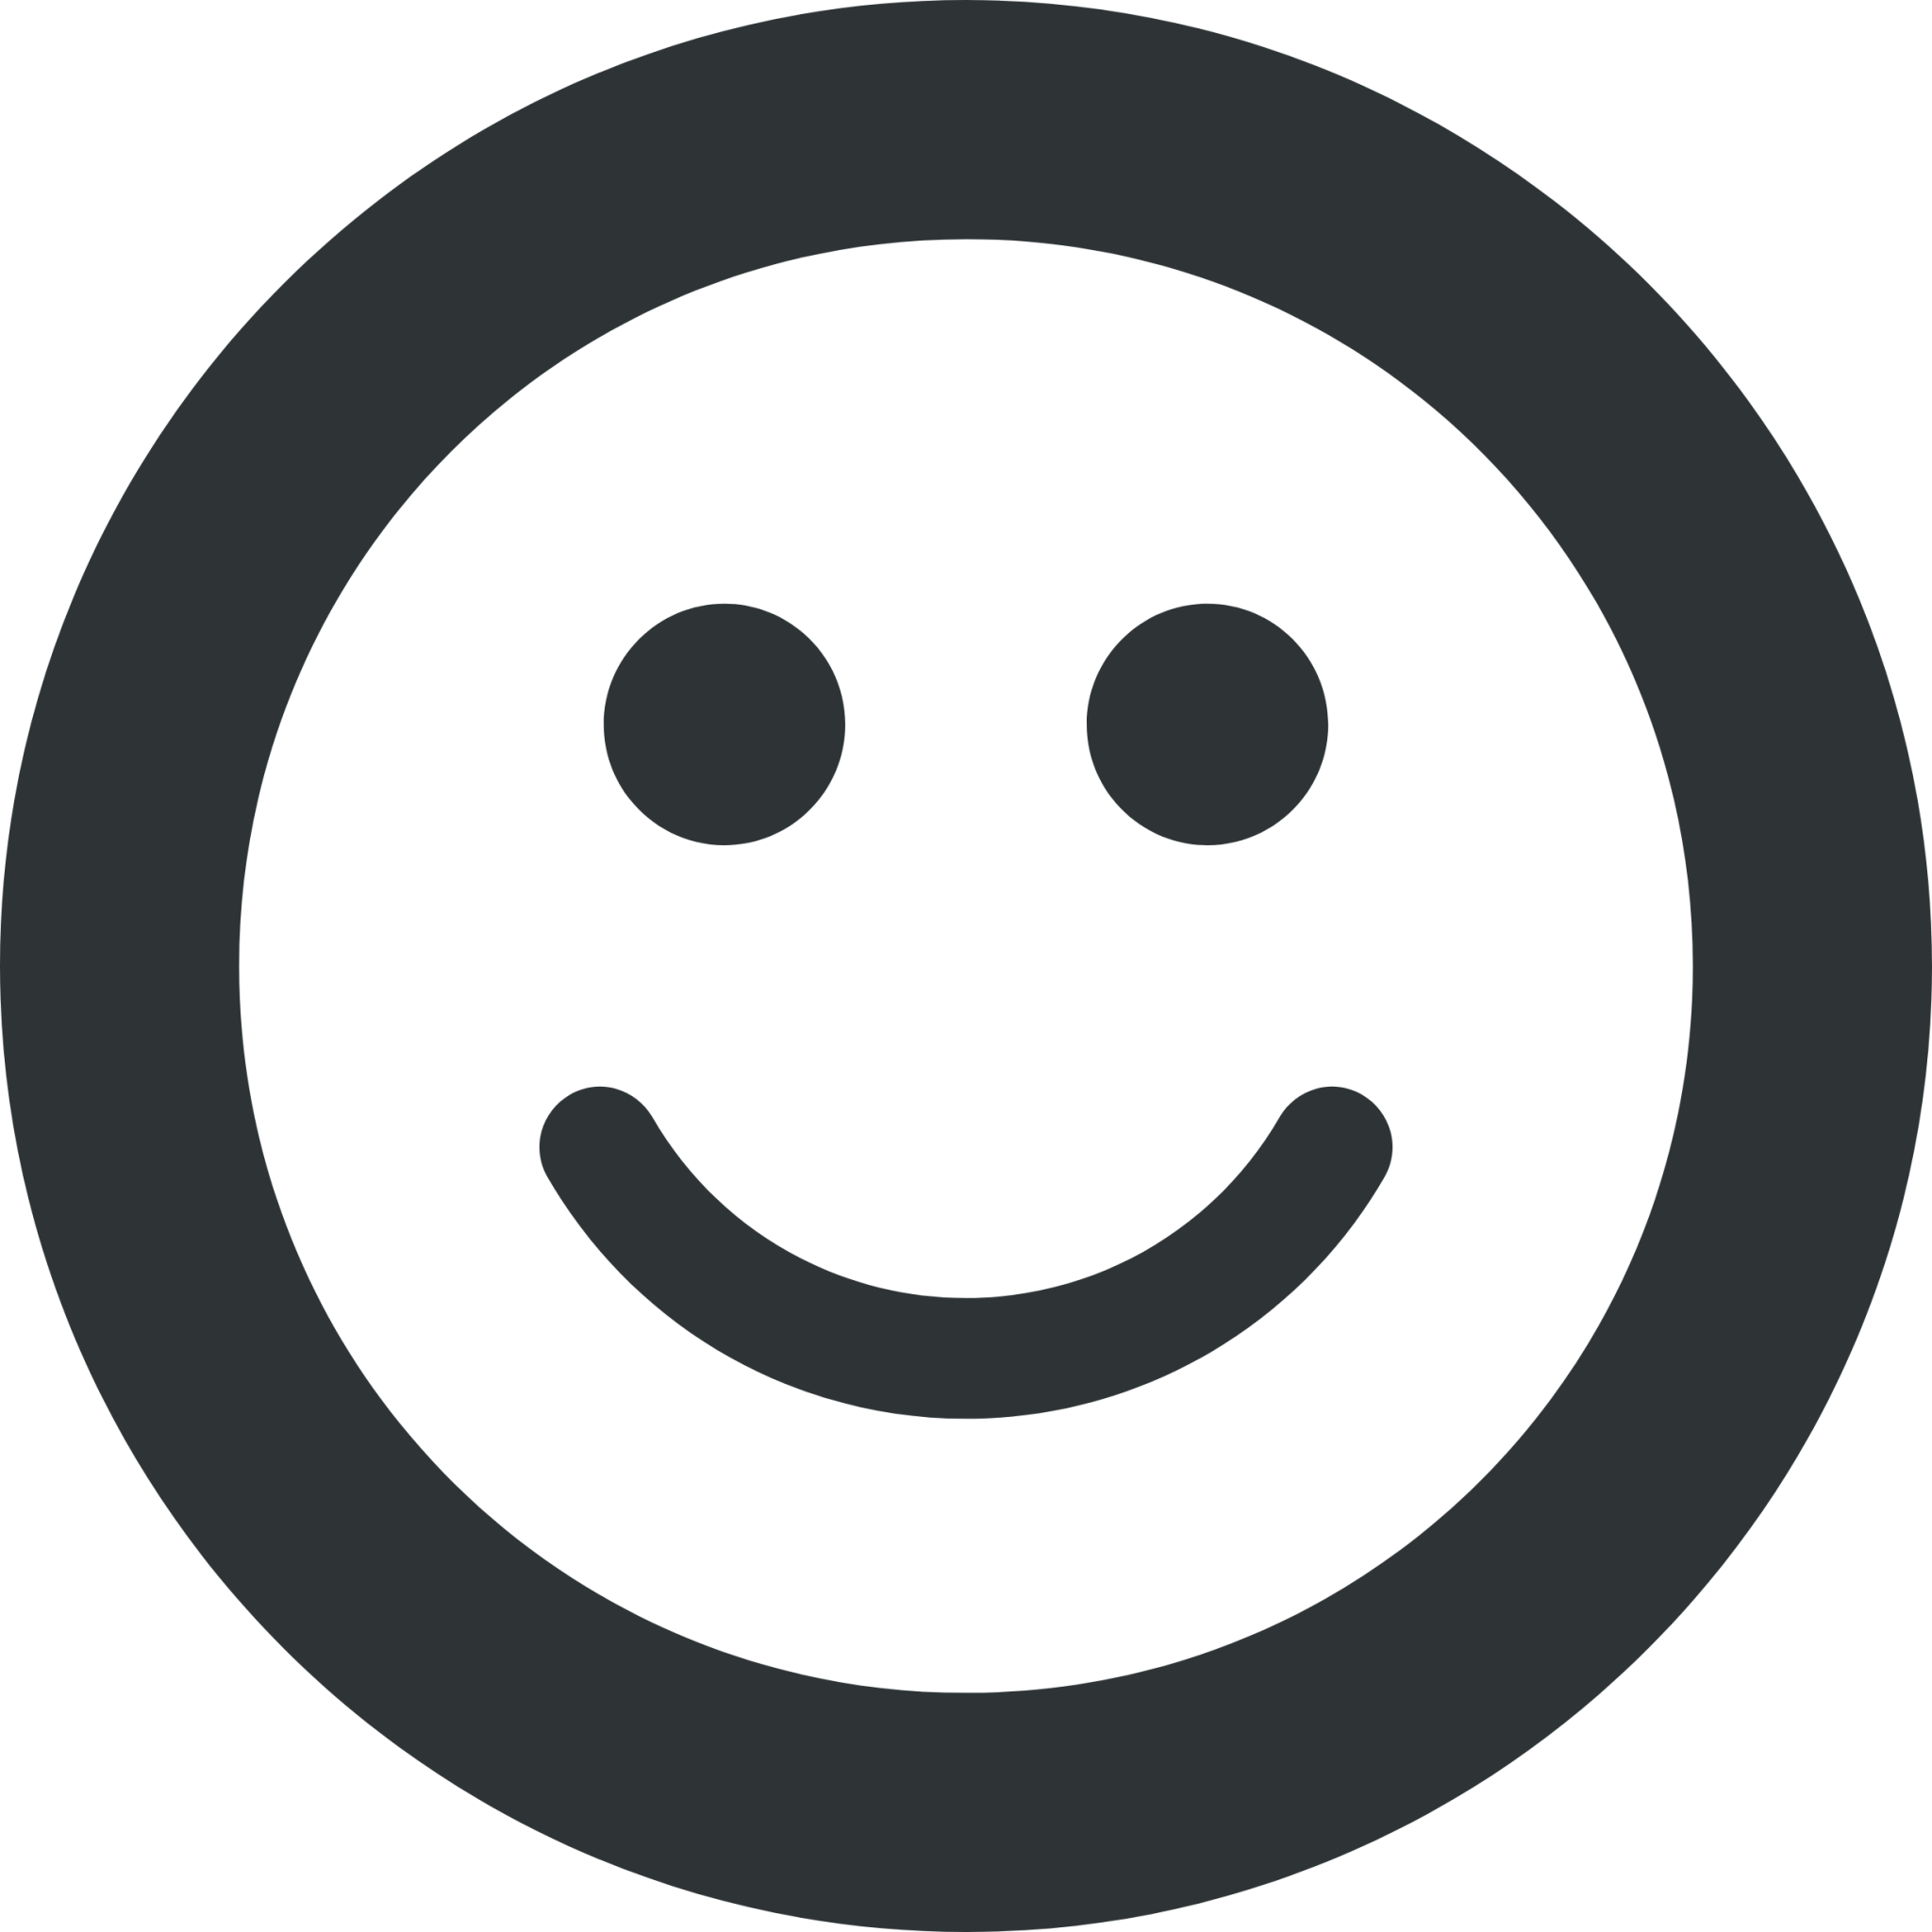 emoji people symbolic icon